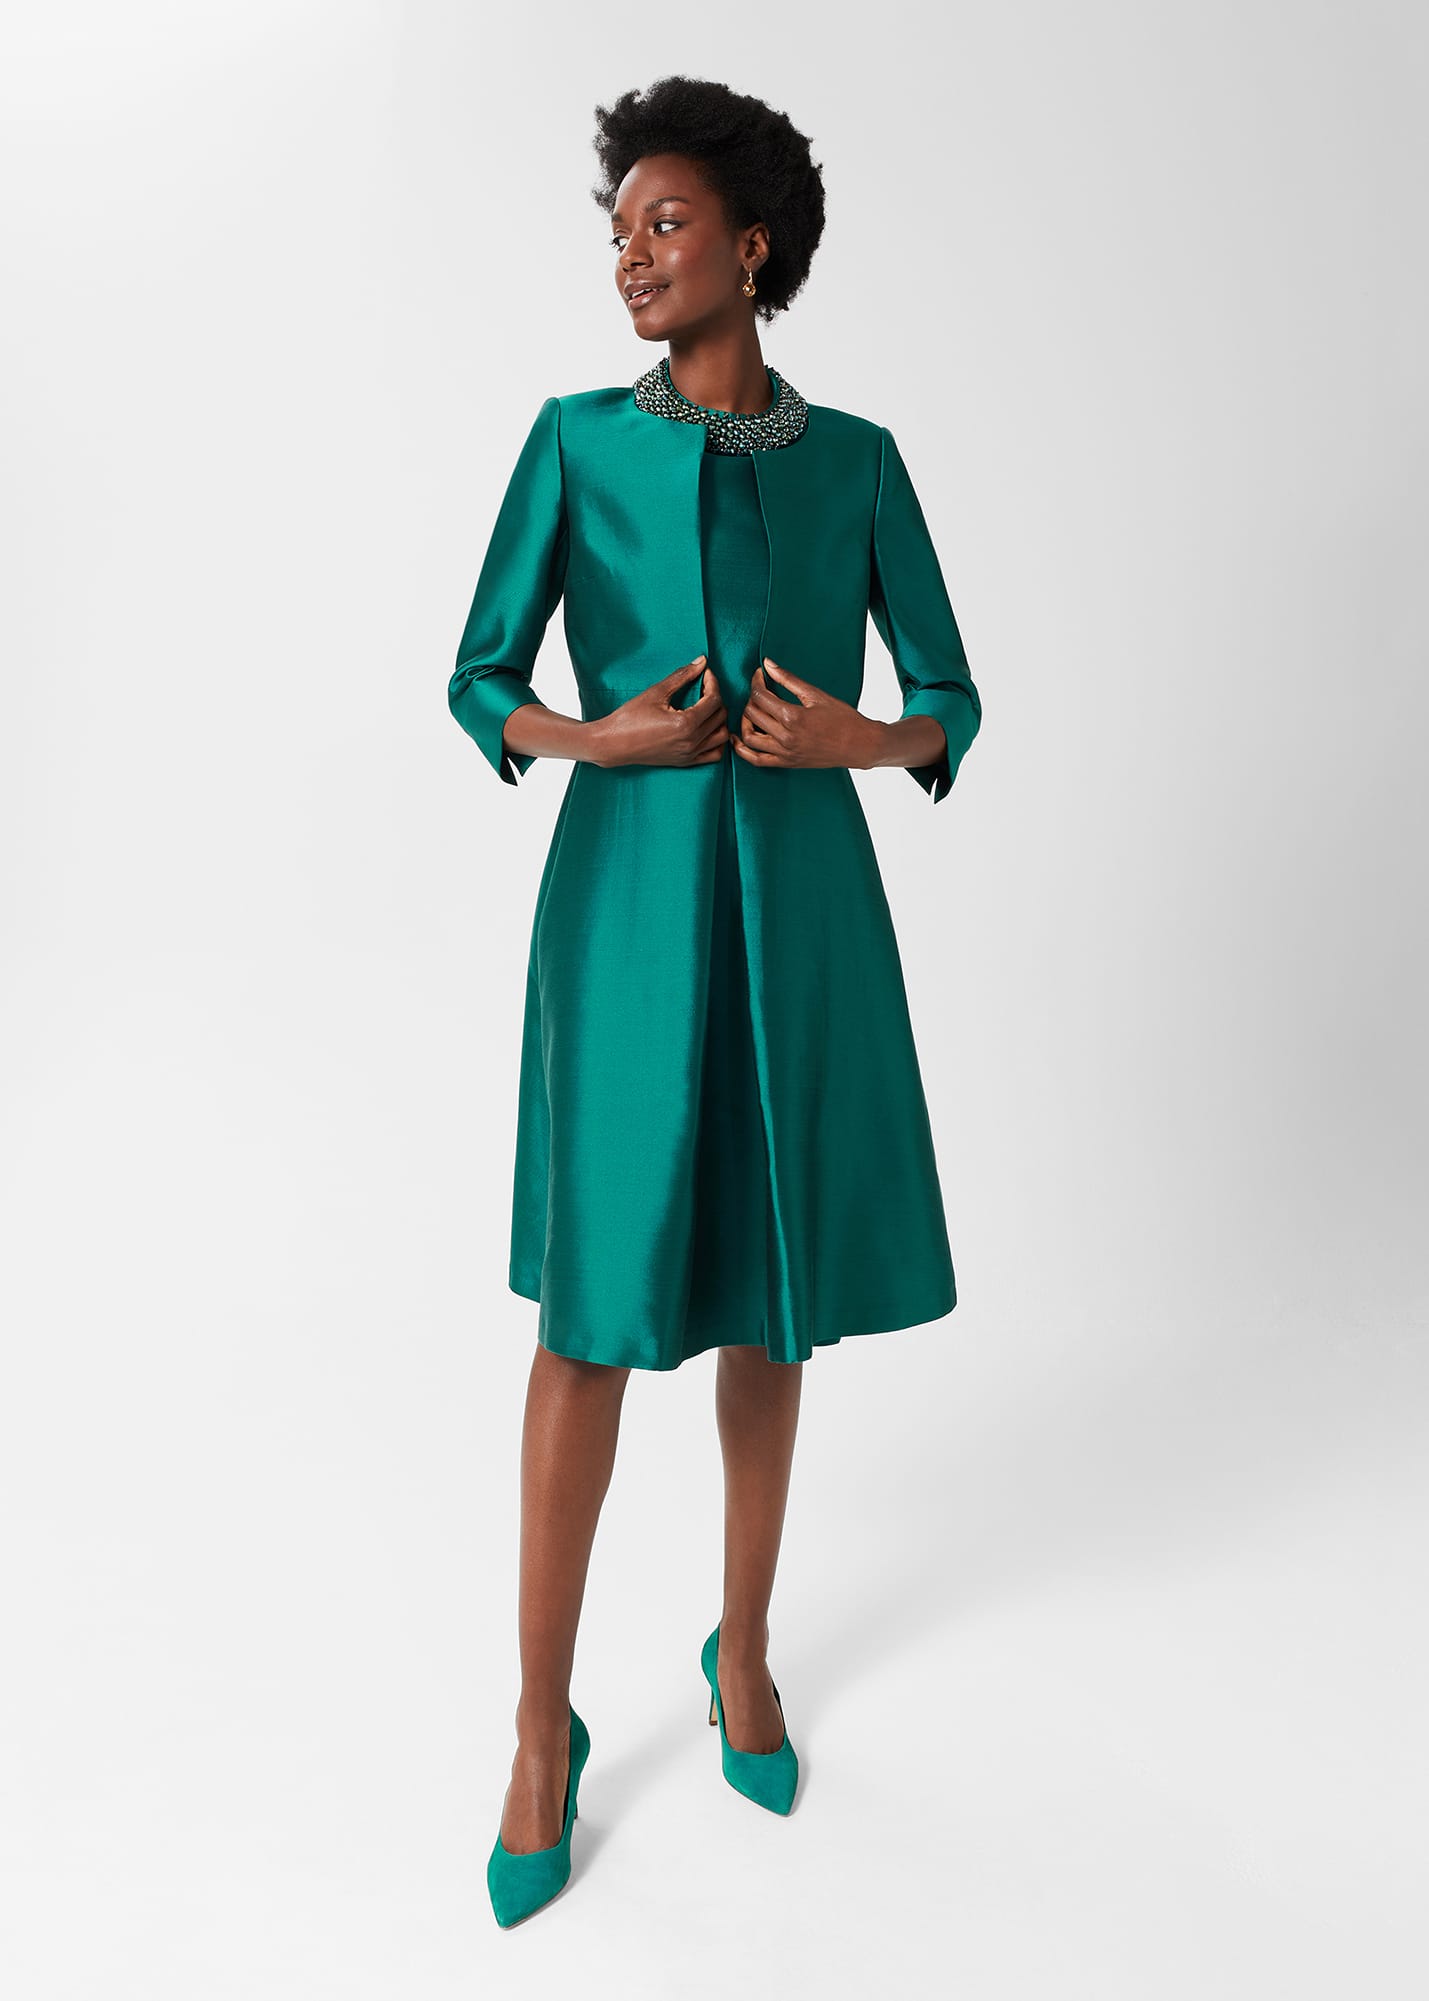 Hobbs Women's Christie Silk Blend Jacket - Jewel Green